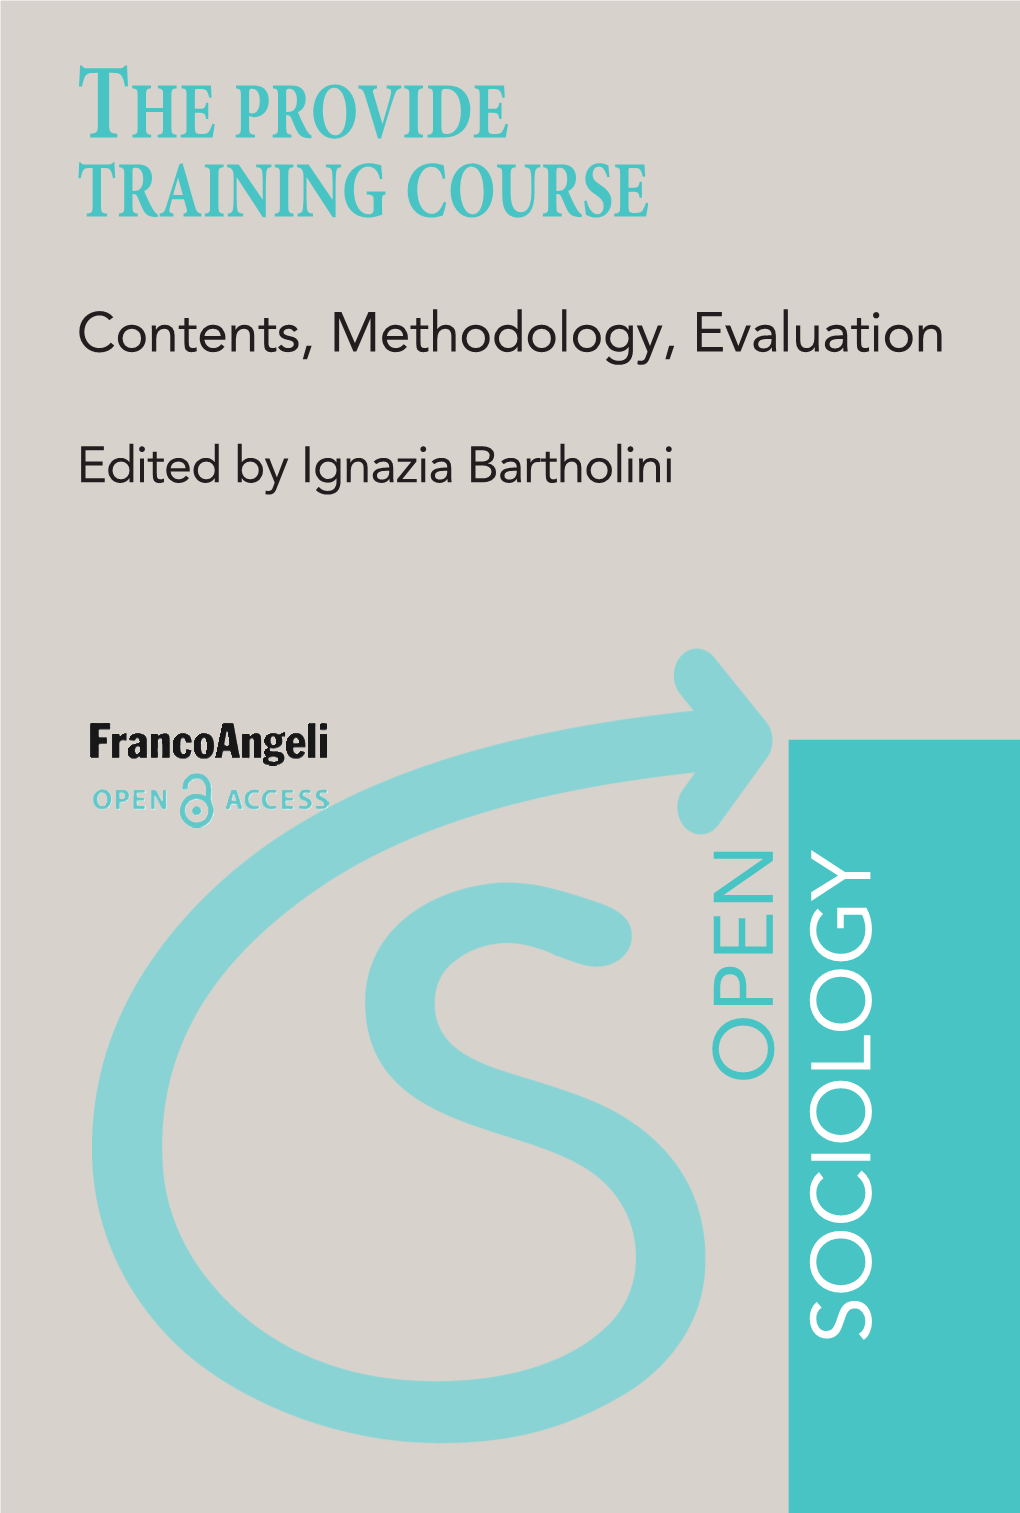 Francoangeli Open Access Platform (